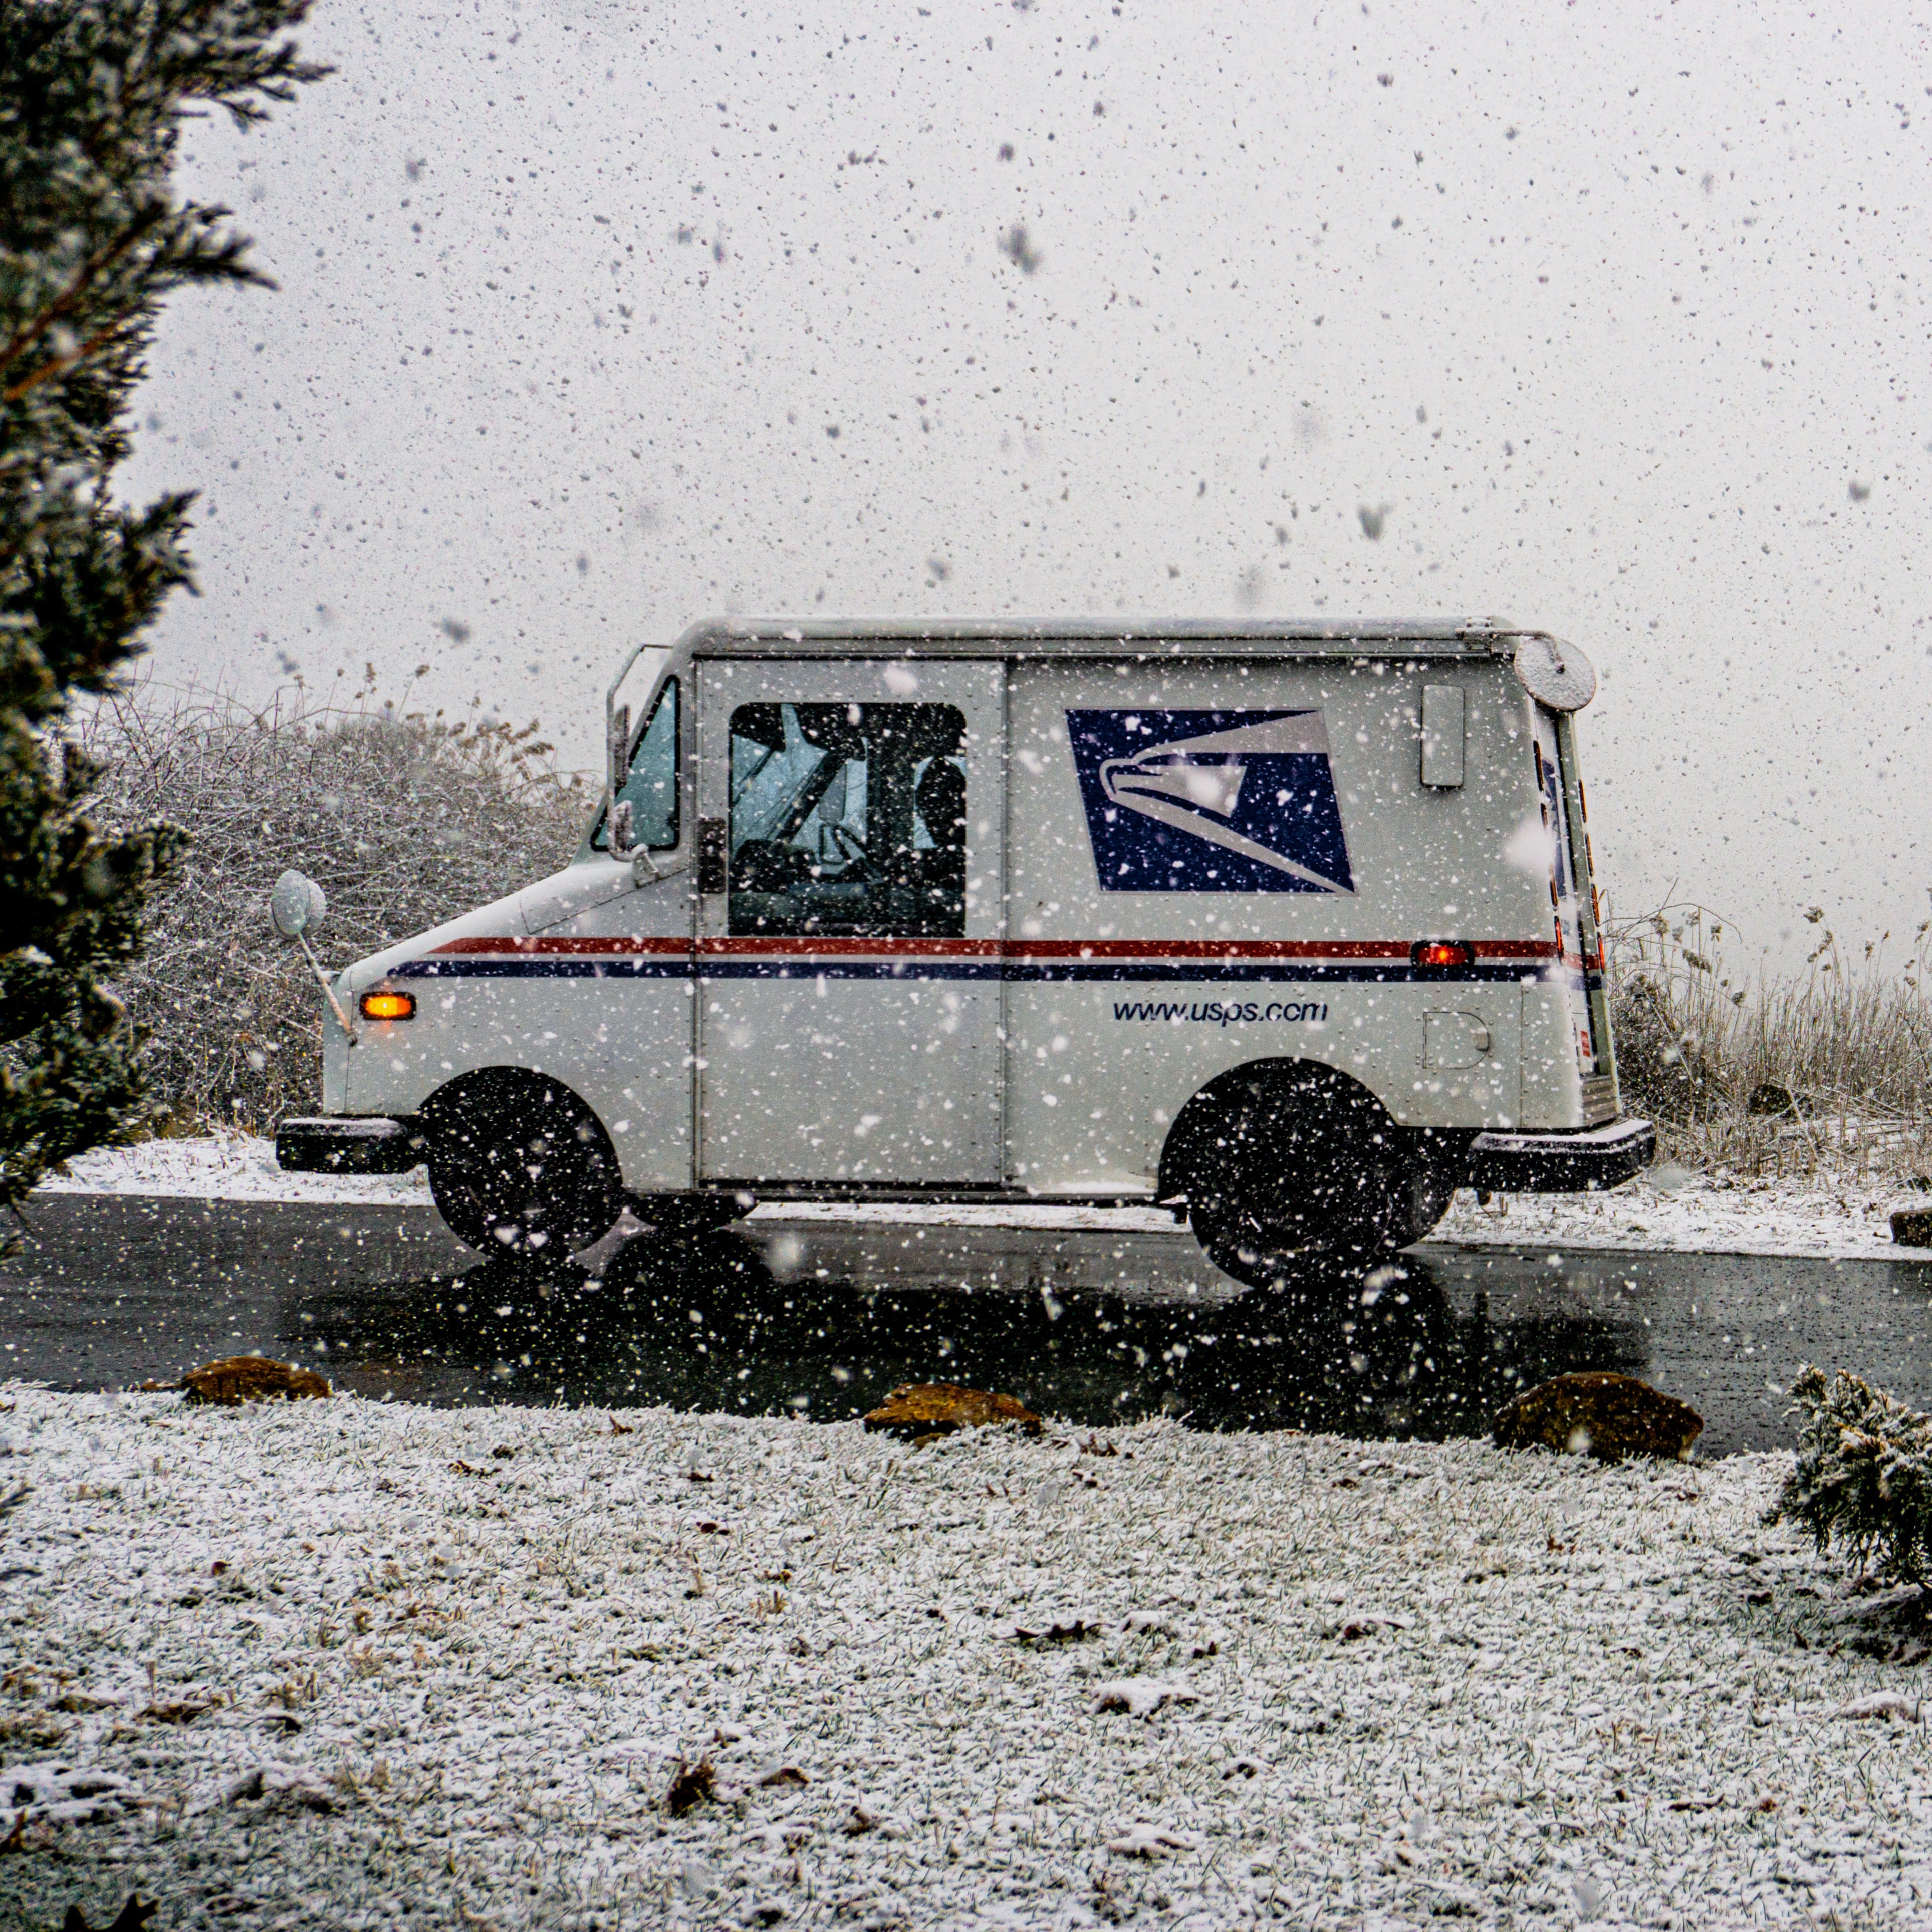 Her mailman, Sam, was right outside delivering her latest bill. | Source: Unsplash